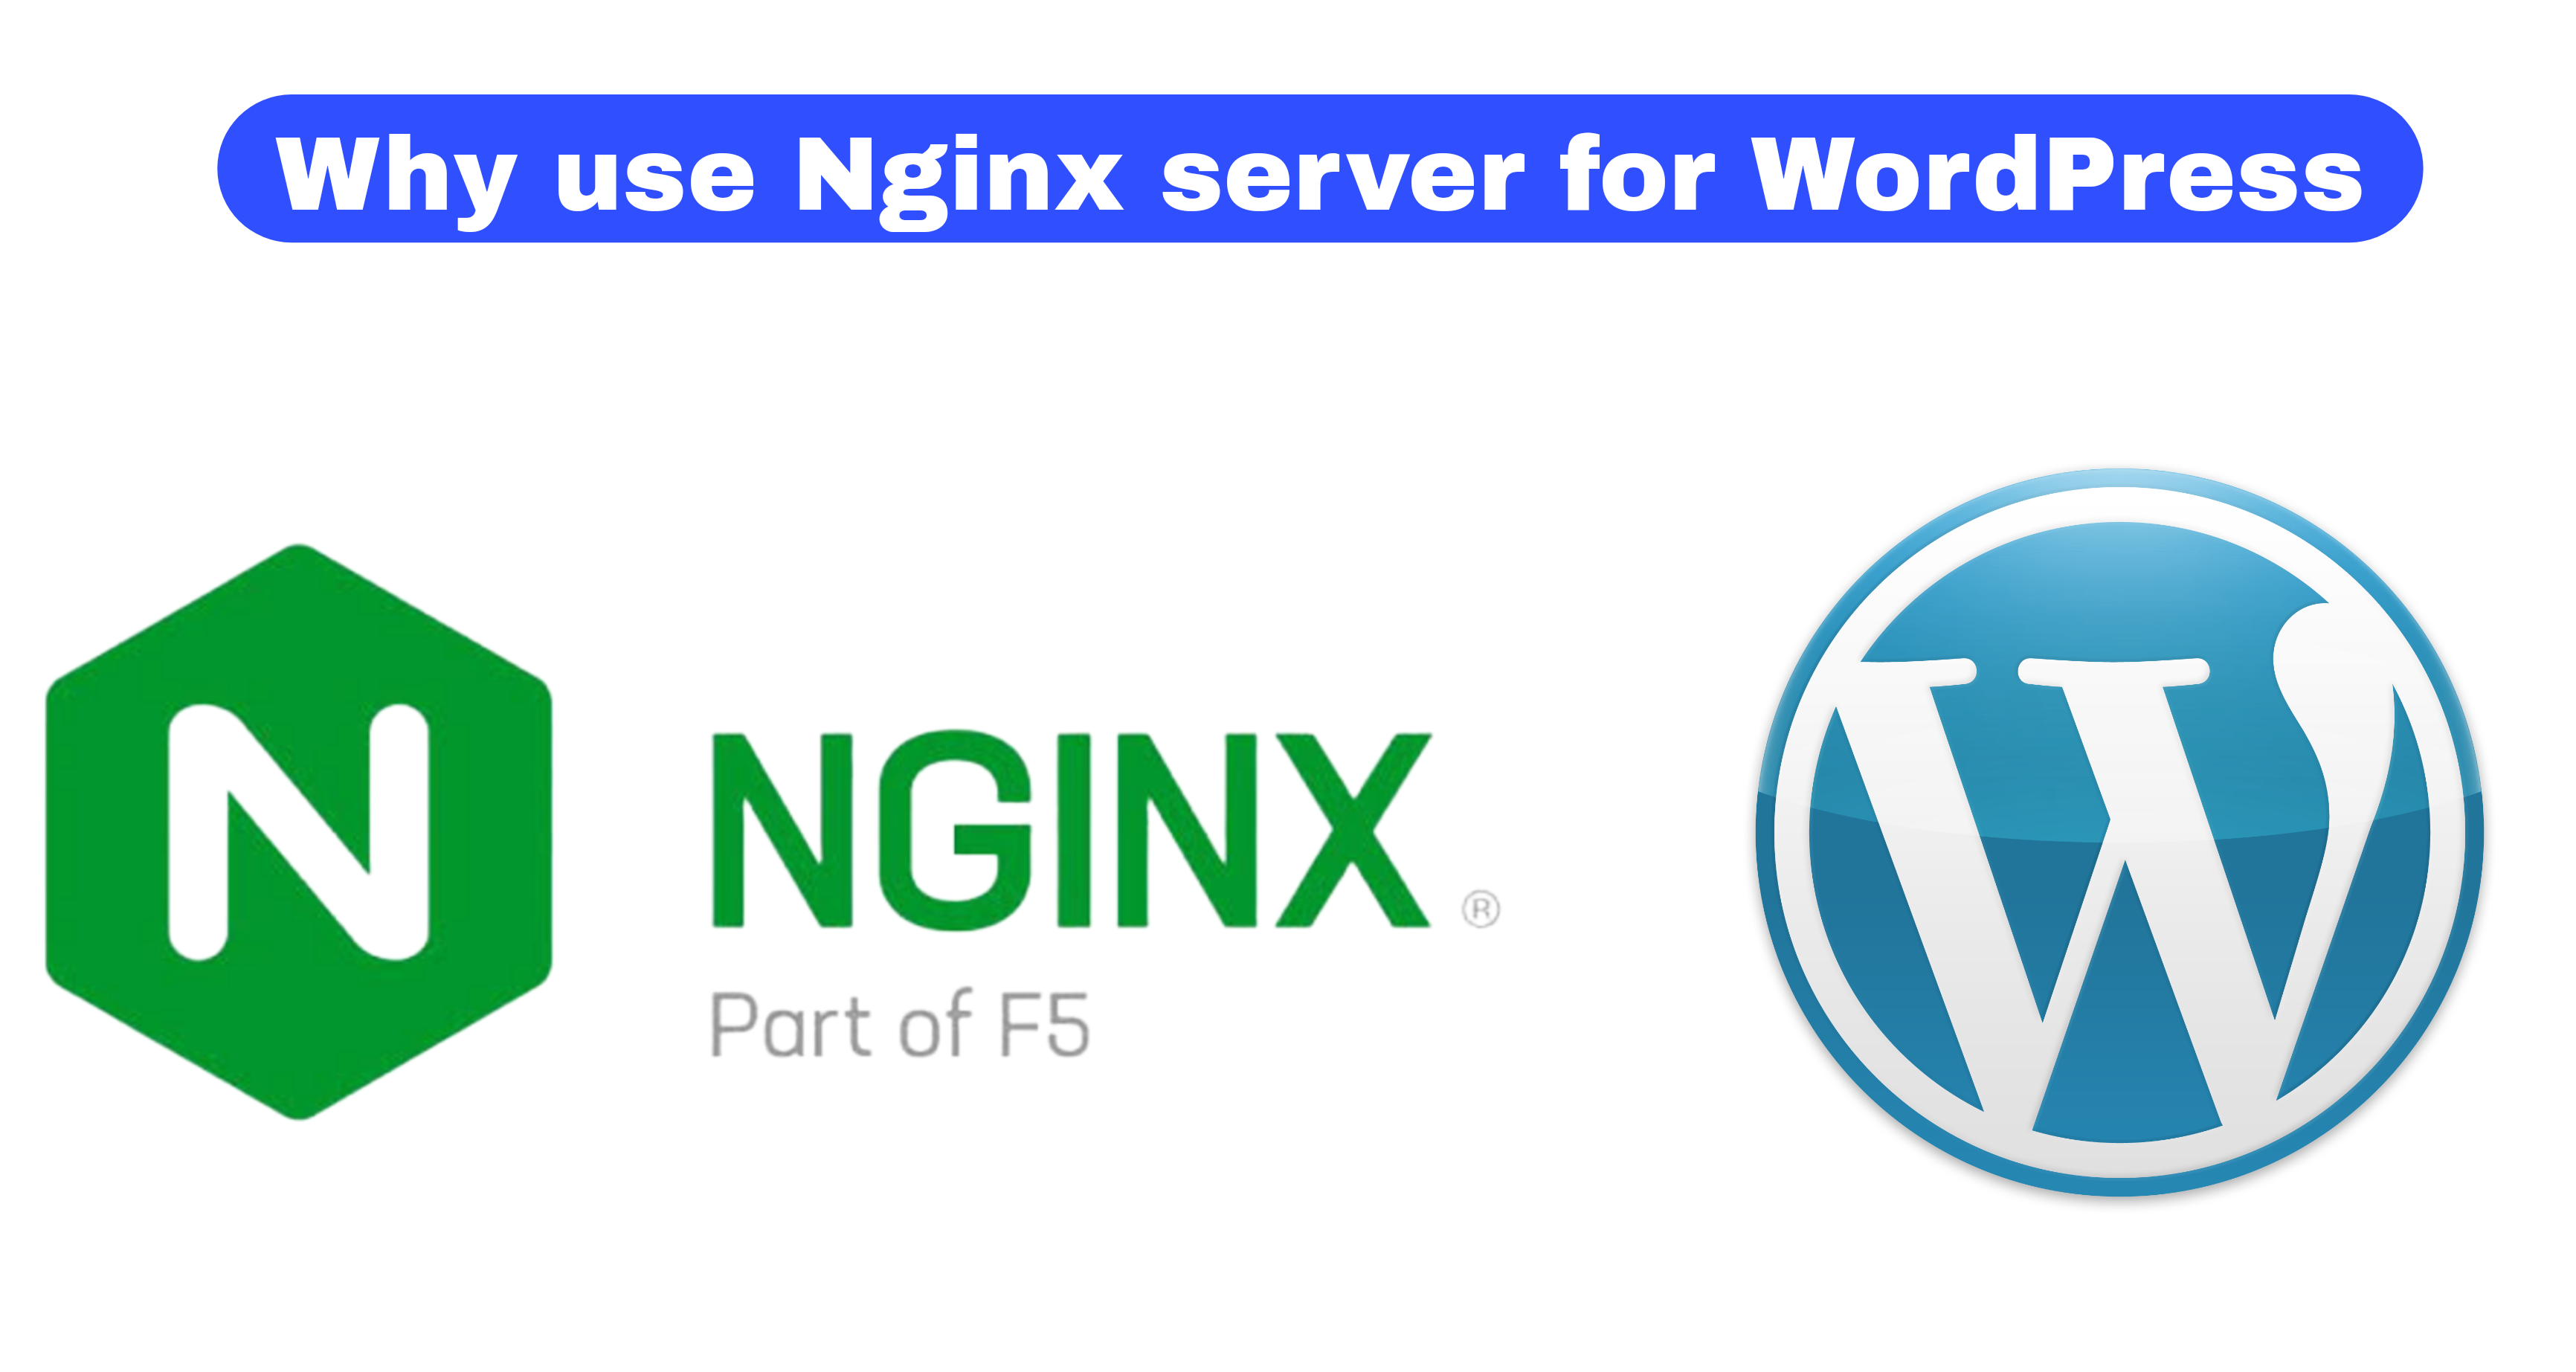 Why use Nginx server for WordPress